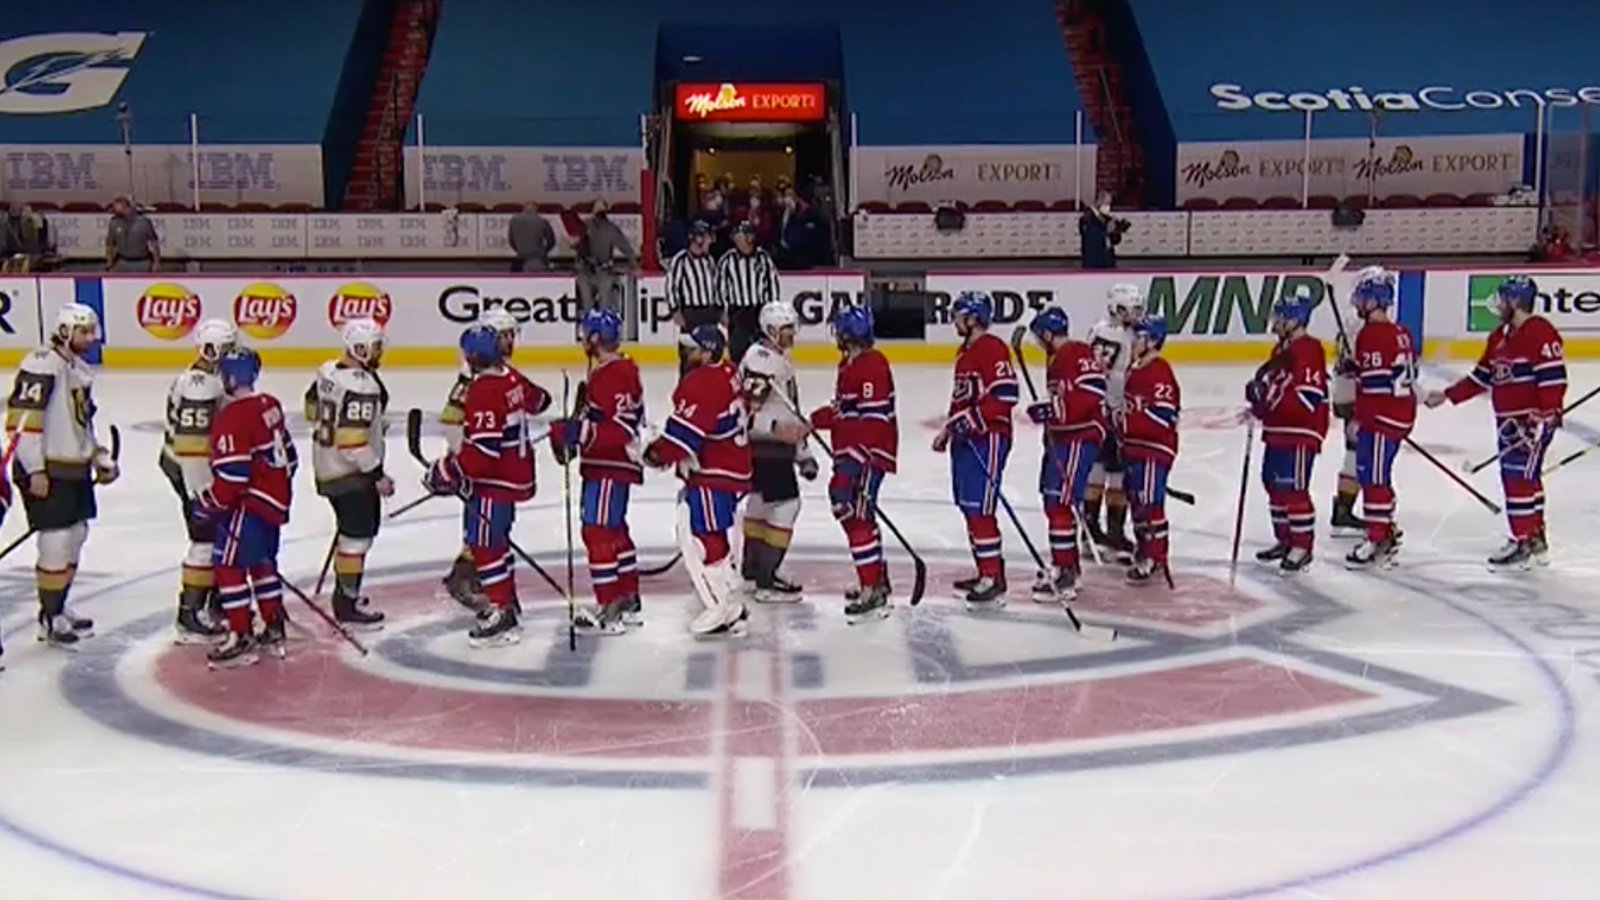 Lehkonen's OT winner sends the Canadiens to the Stanley Cup Final